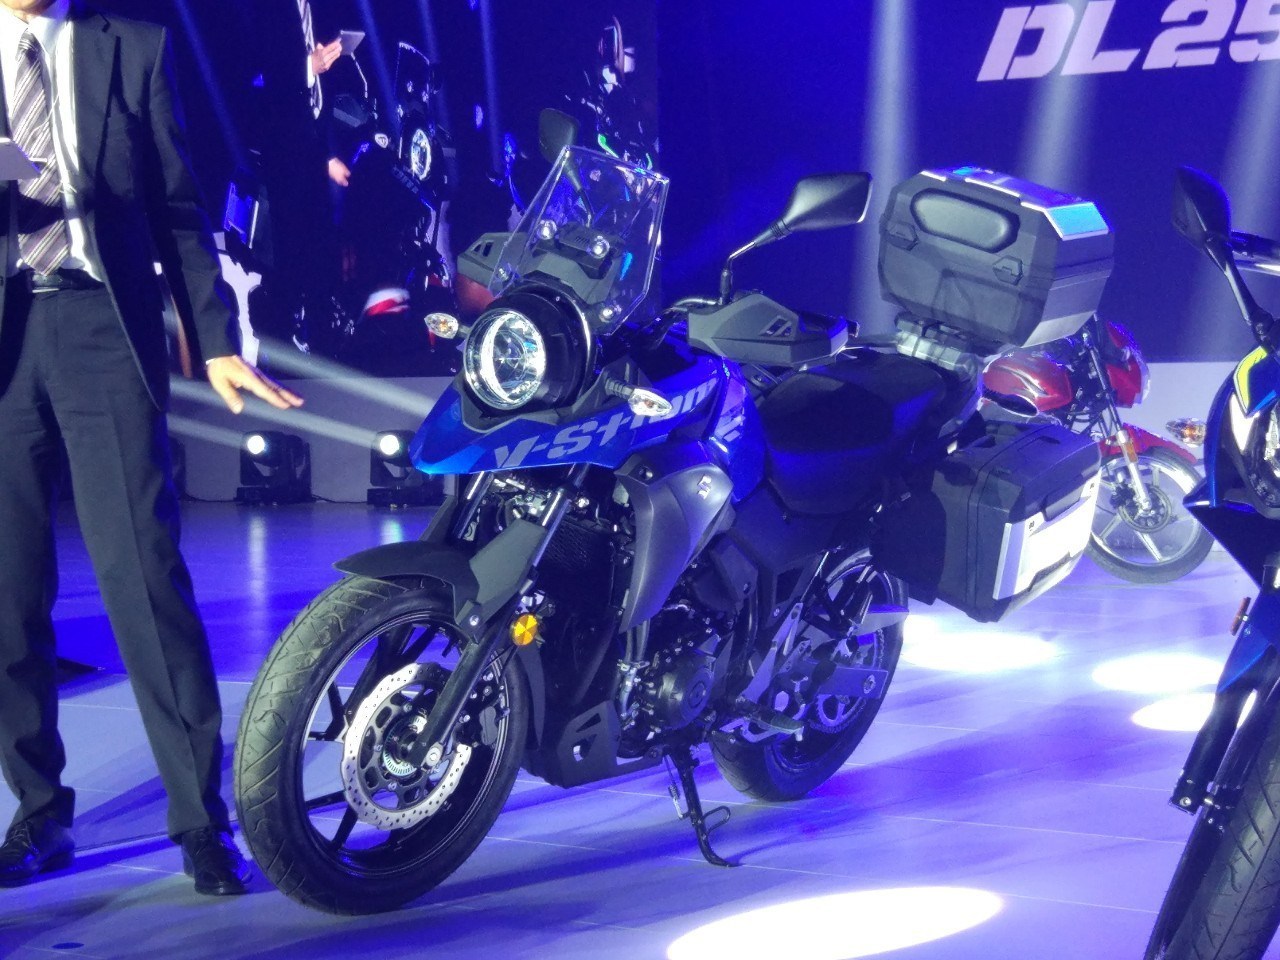 Suzuki V-Strom 250 concept motorcycle